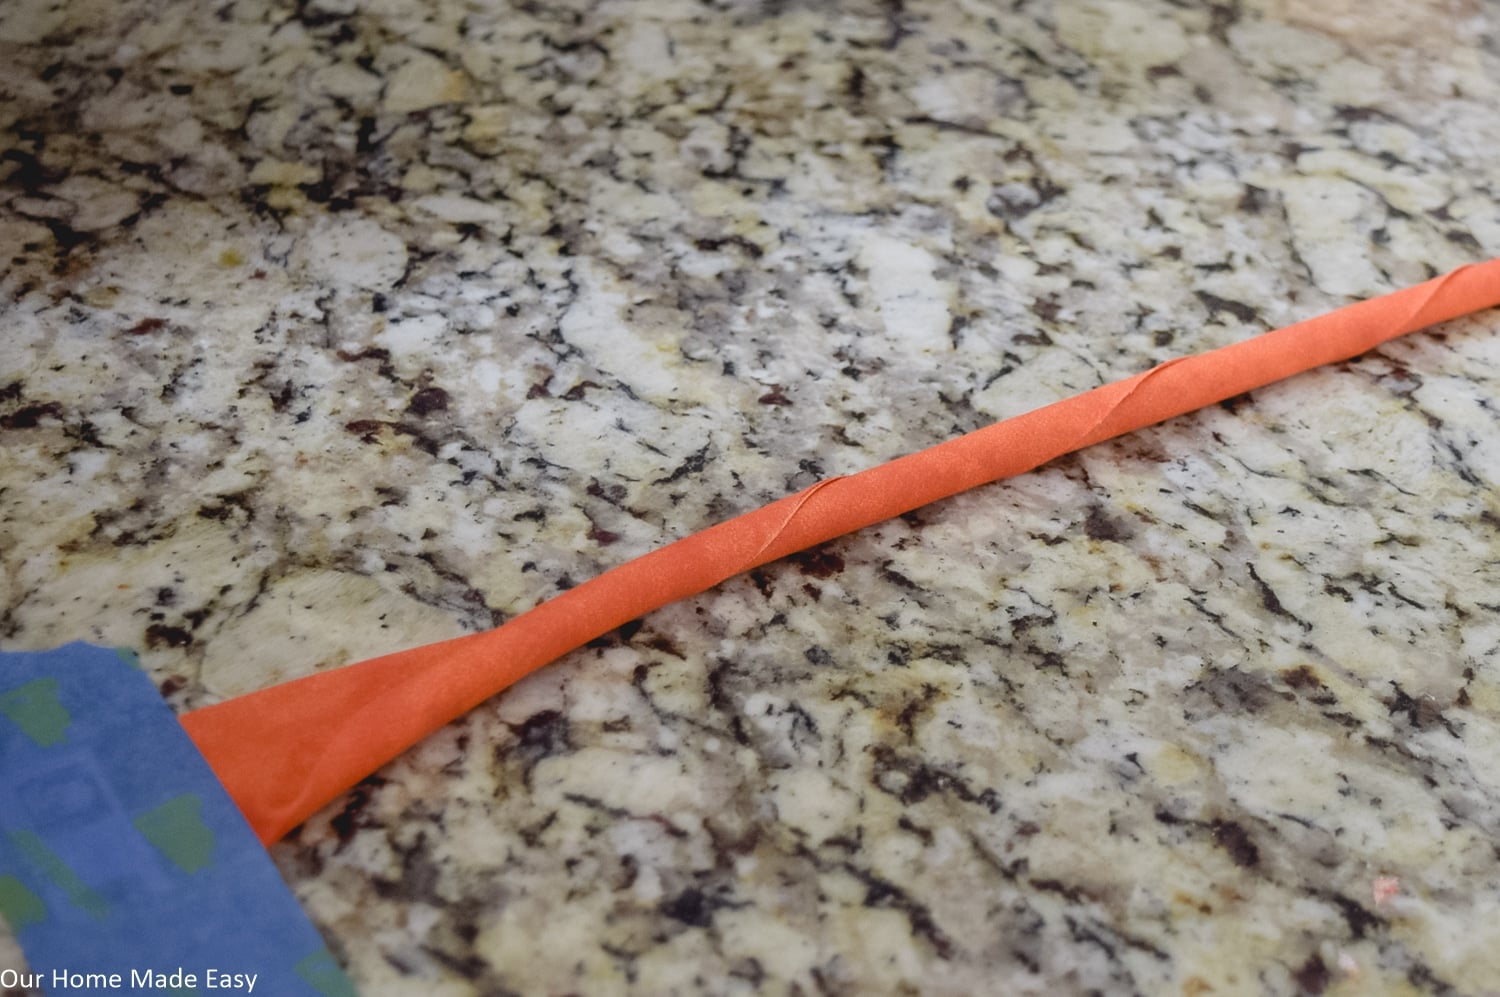 Roll the fabric into a rope-like cord to create the fabric pumpkin shape